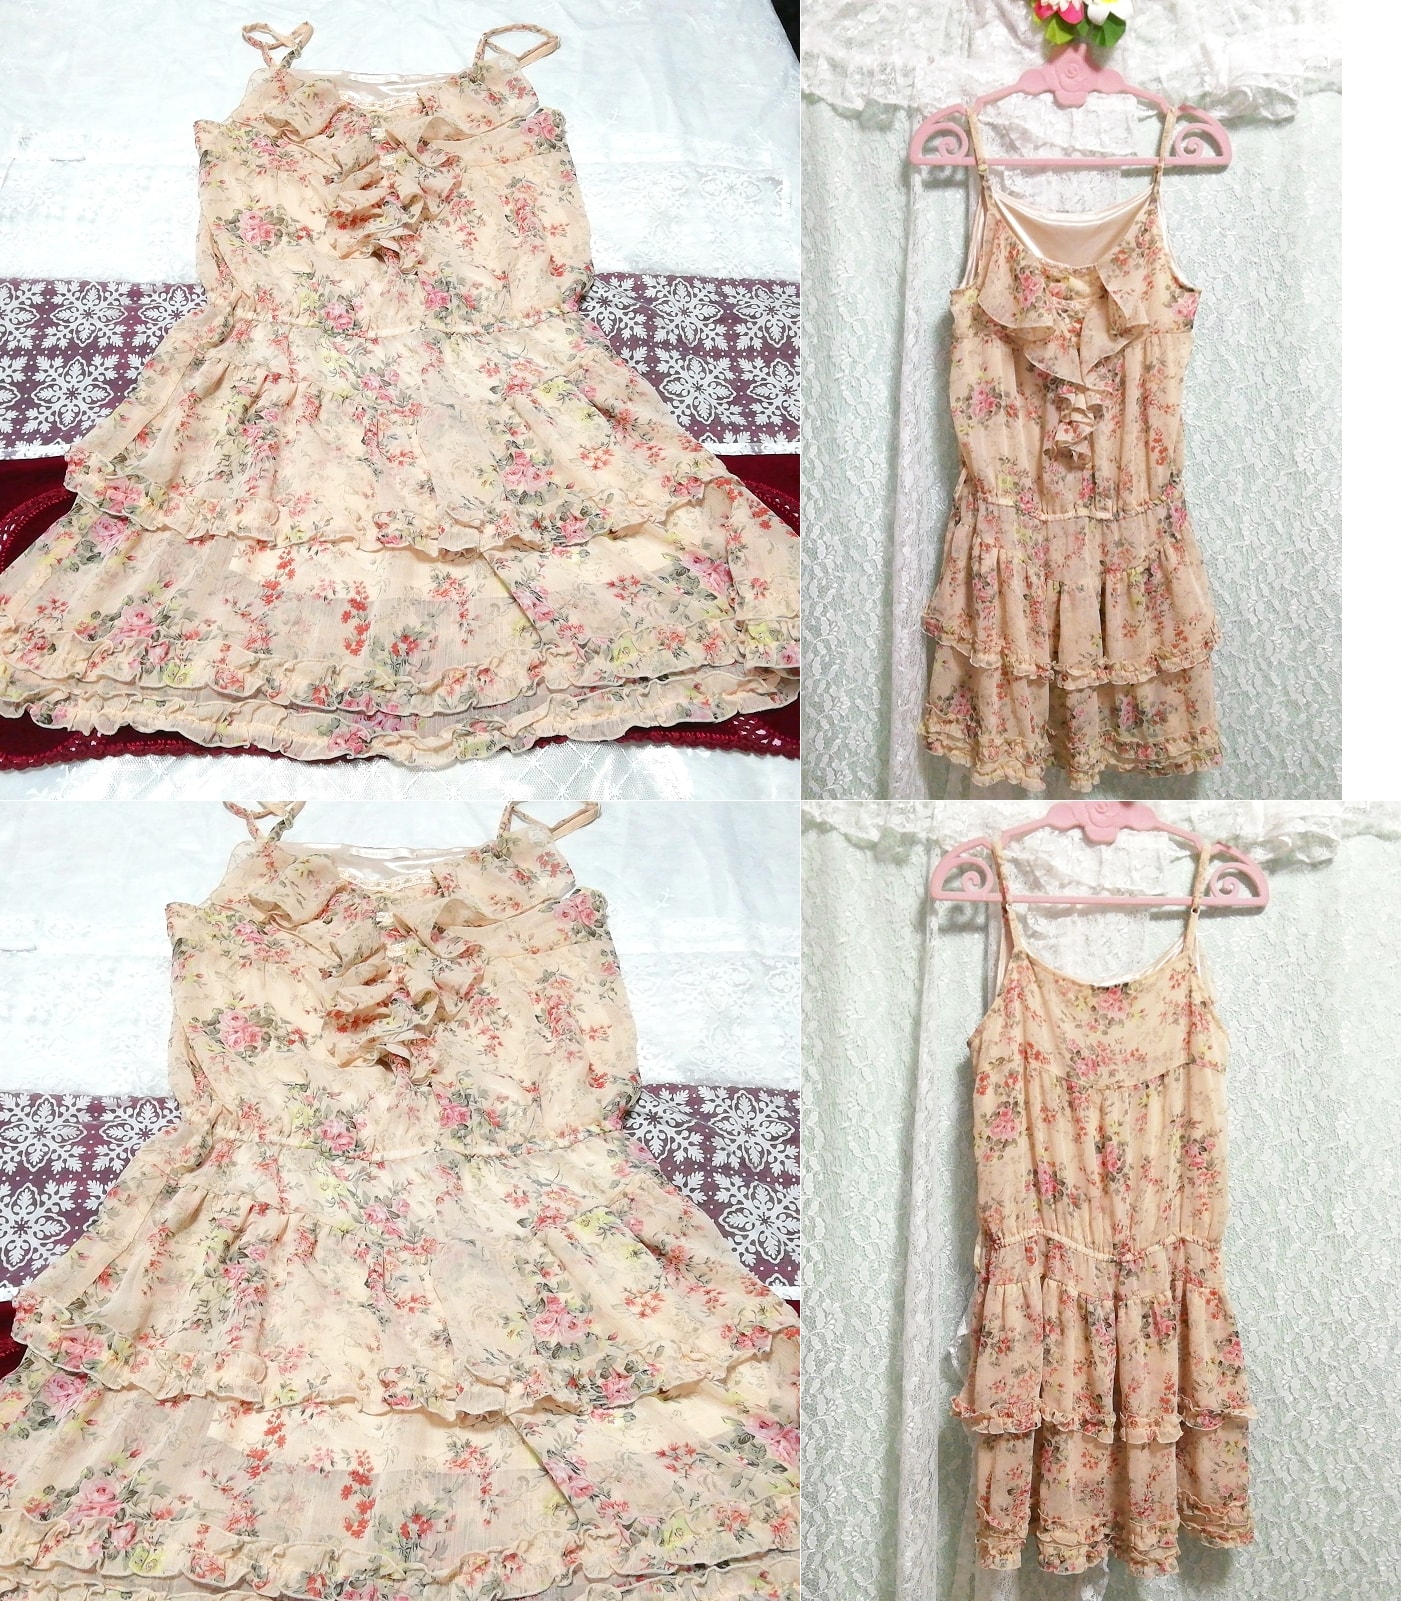 Brown ruffle chiffon negligee nightgown camisole dress, knee length skirt, m size